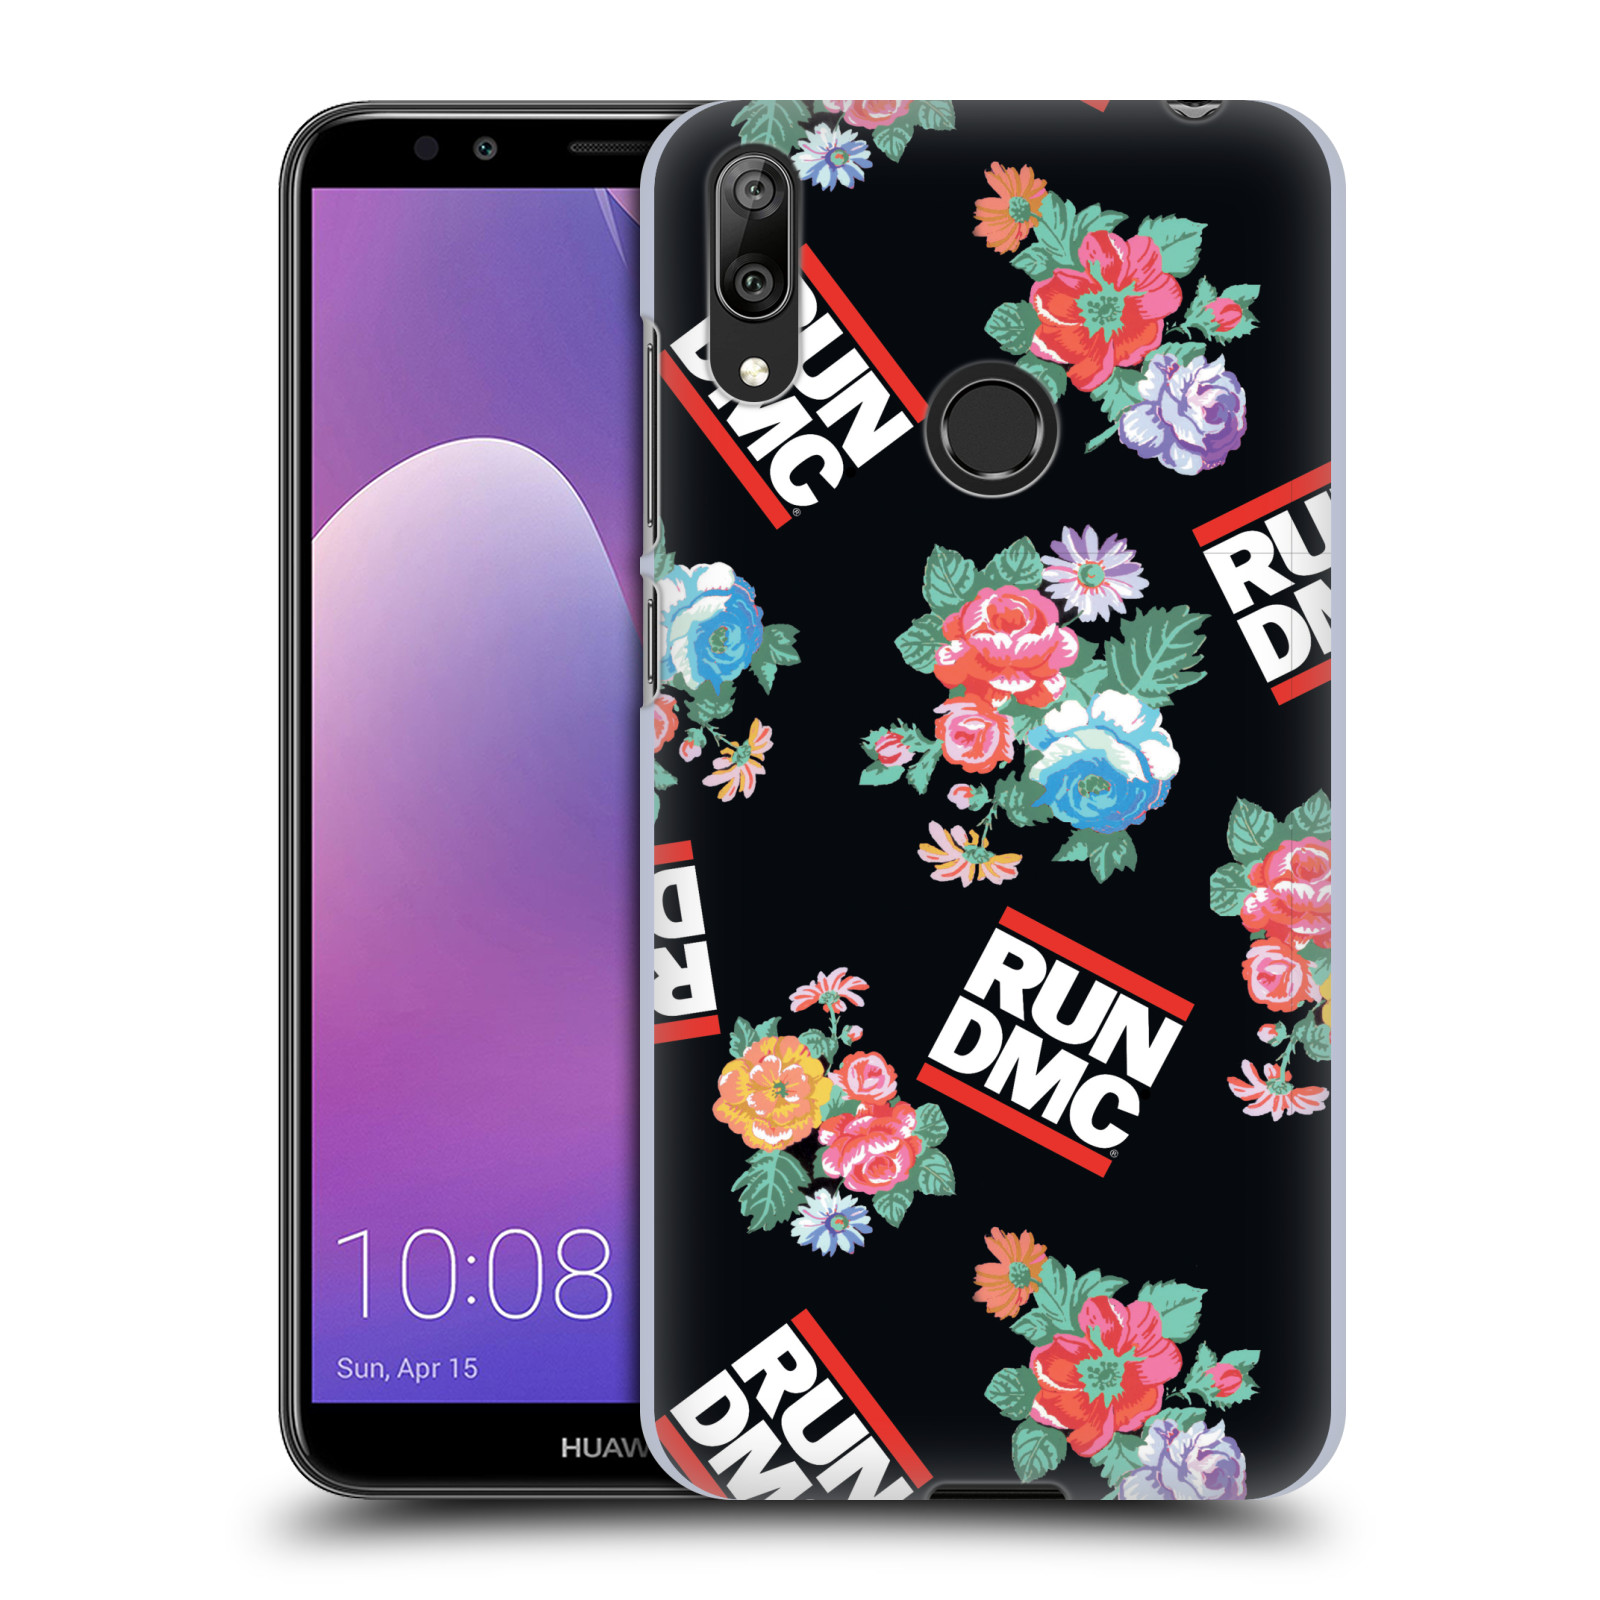 Pouzdro na mobil Huawei Y7 2019 - Head Case - rapová kapela Run DMC květiny černé pozadí